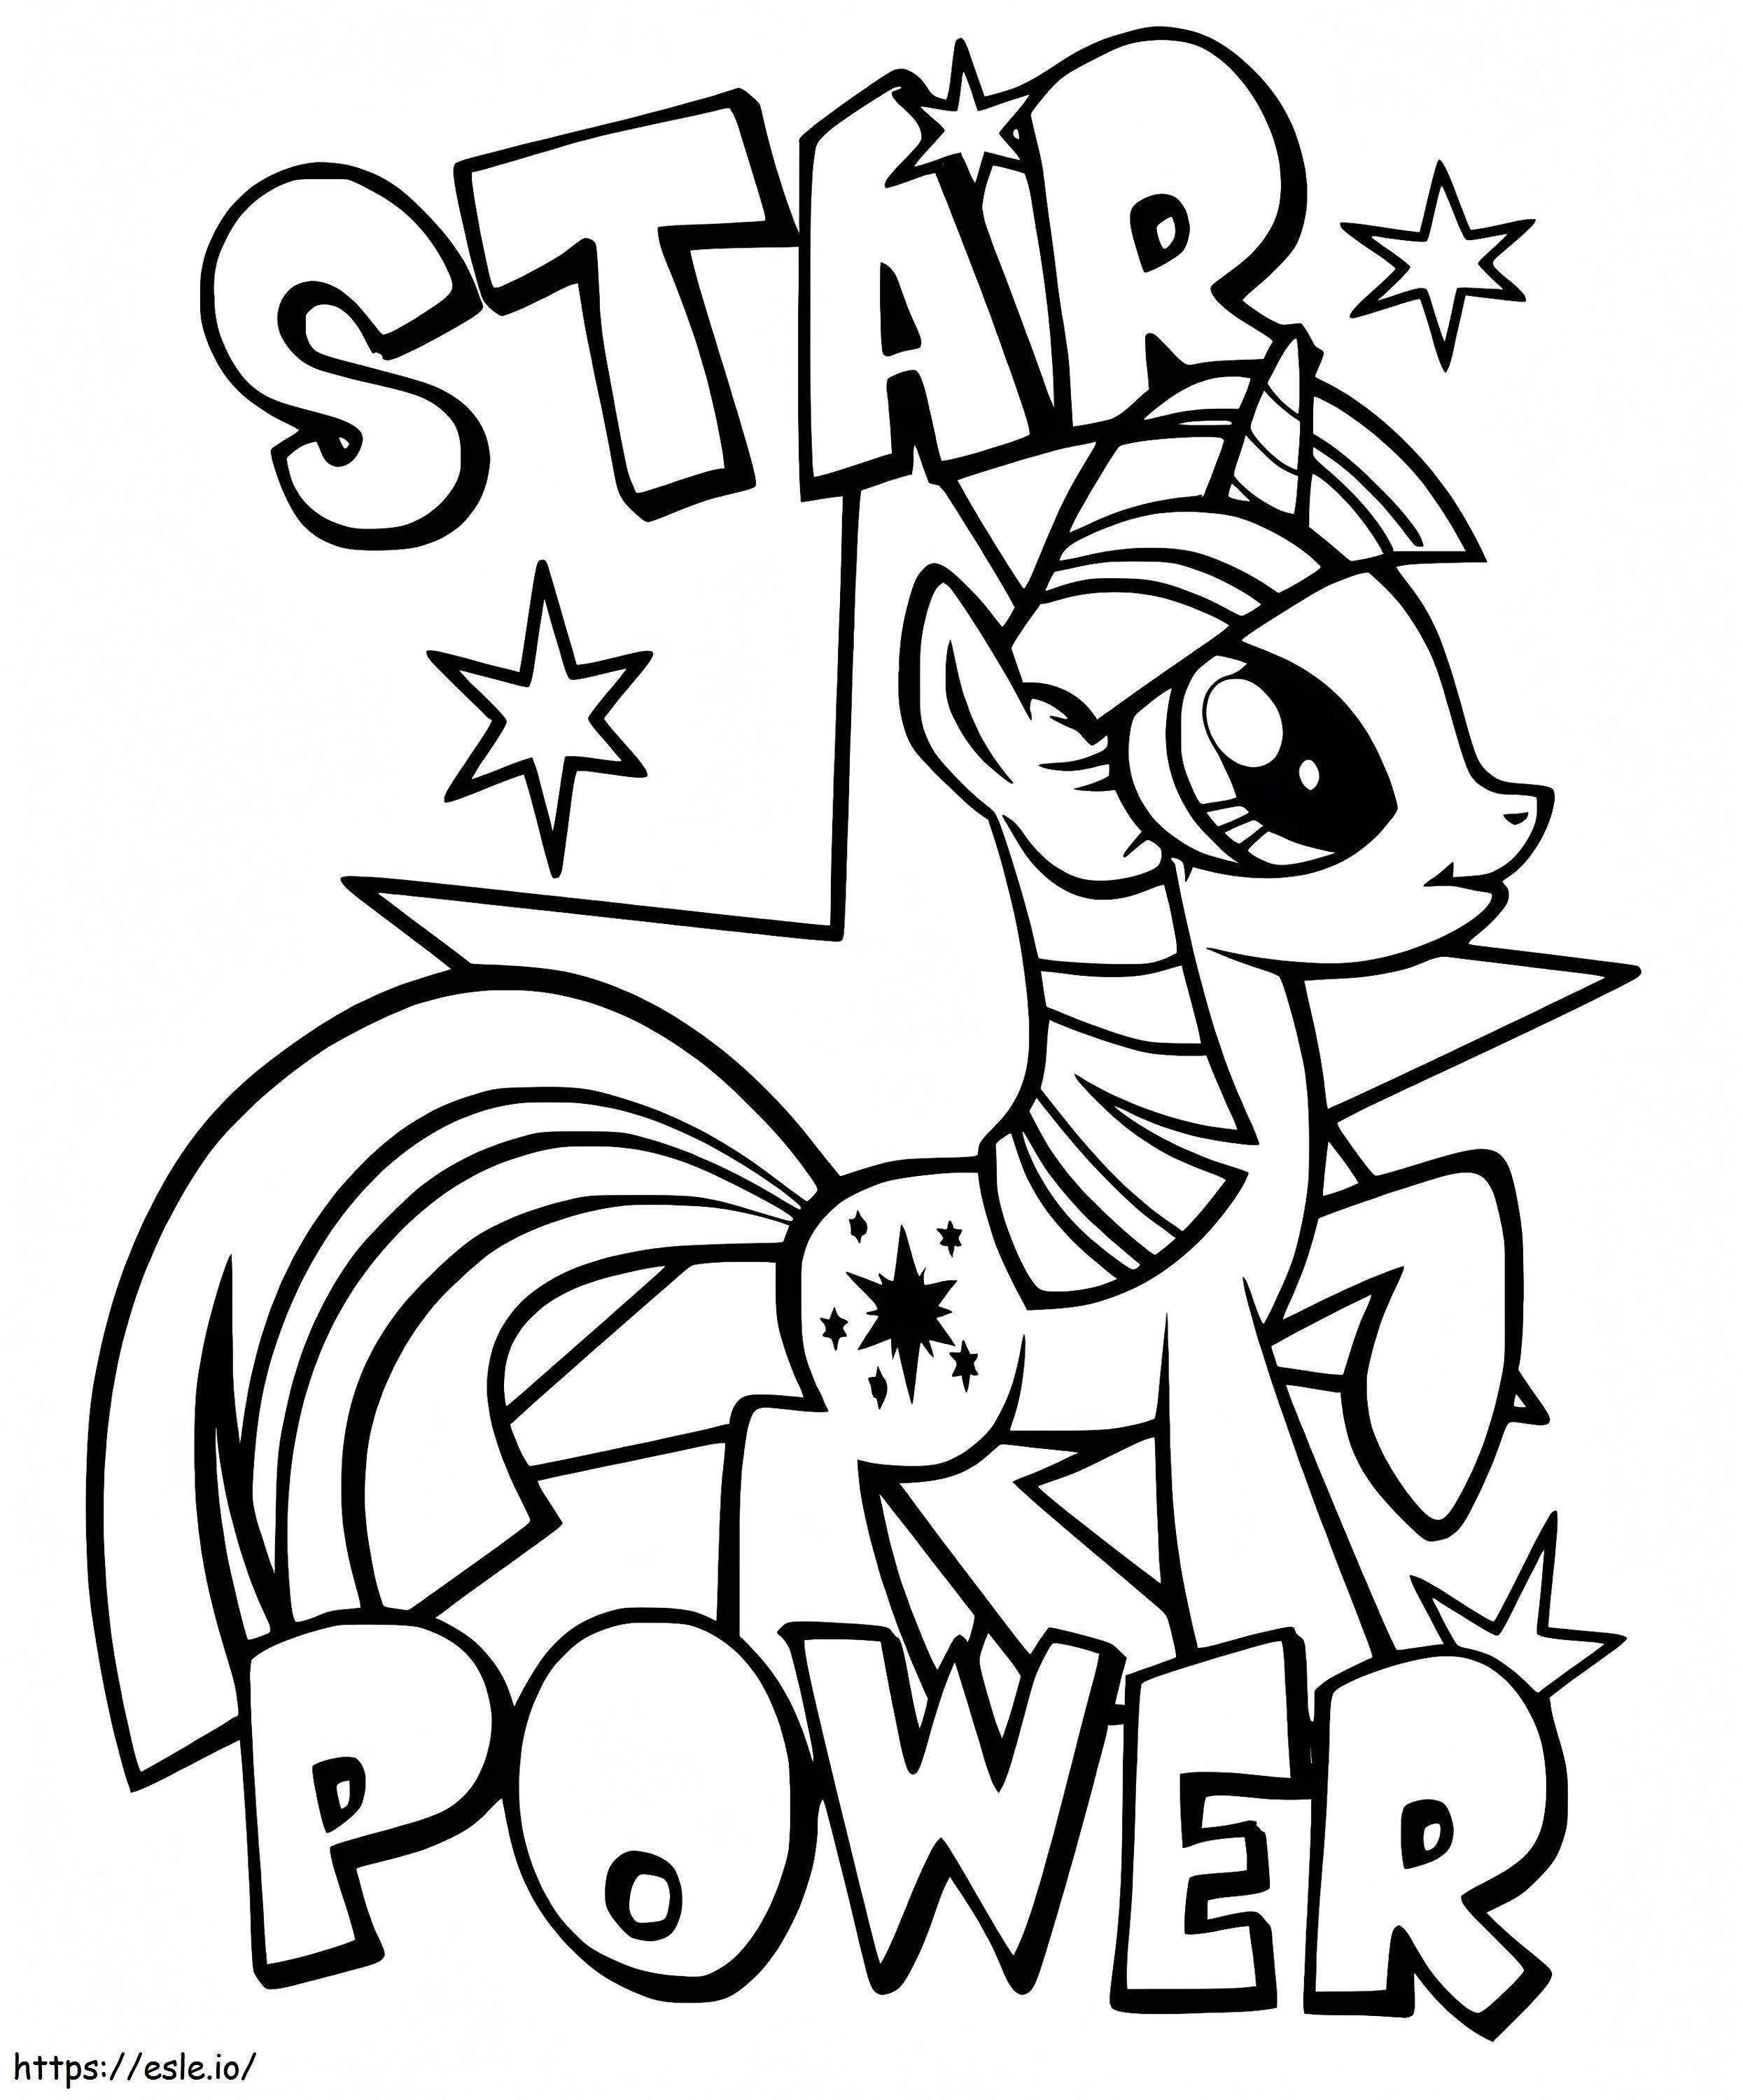 Star Power Twilight Sparkle de colorat